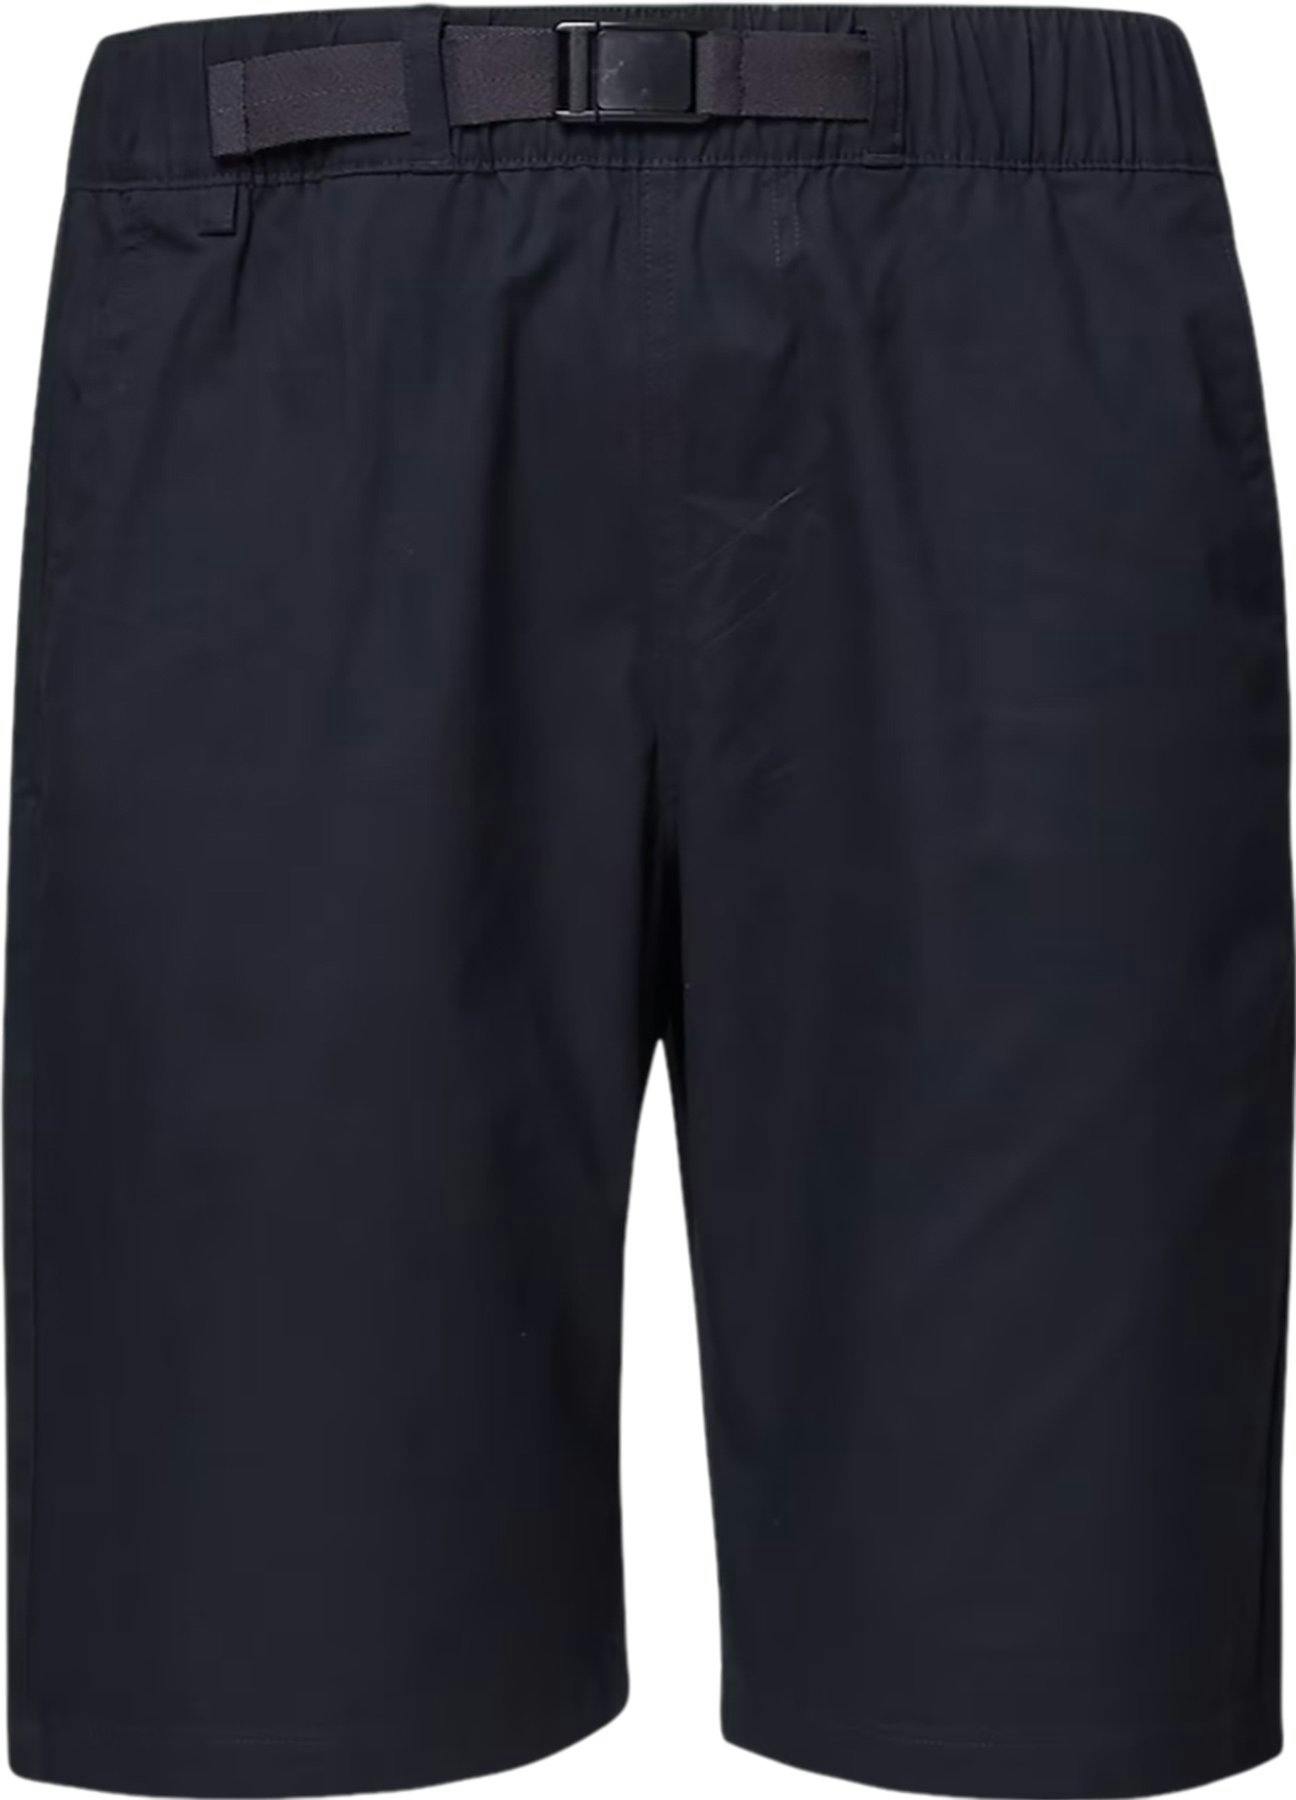 Product image for Roam Commuter Shorts - Men's